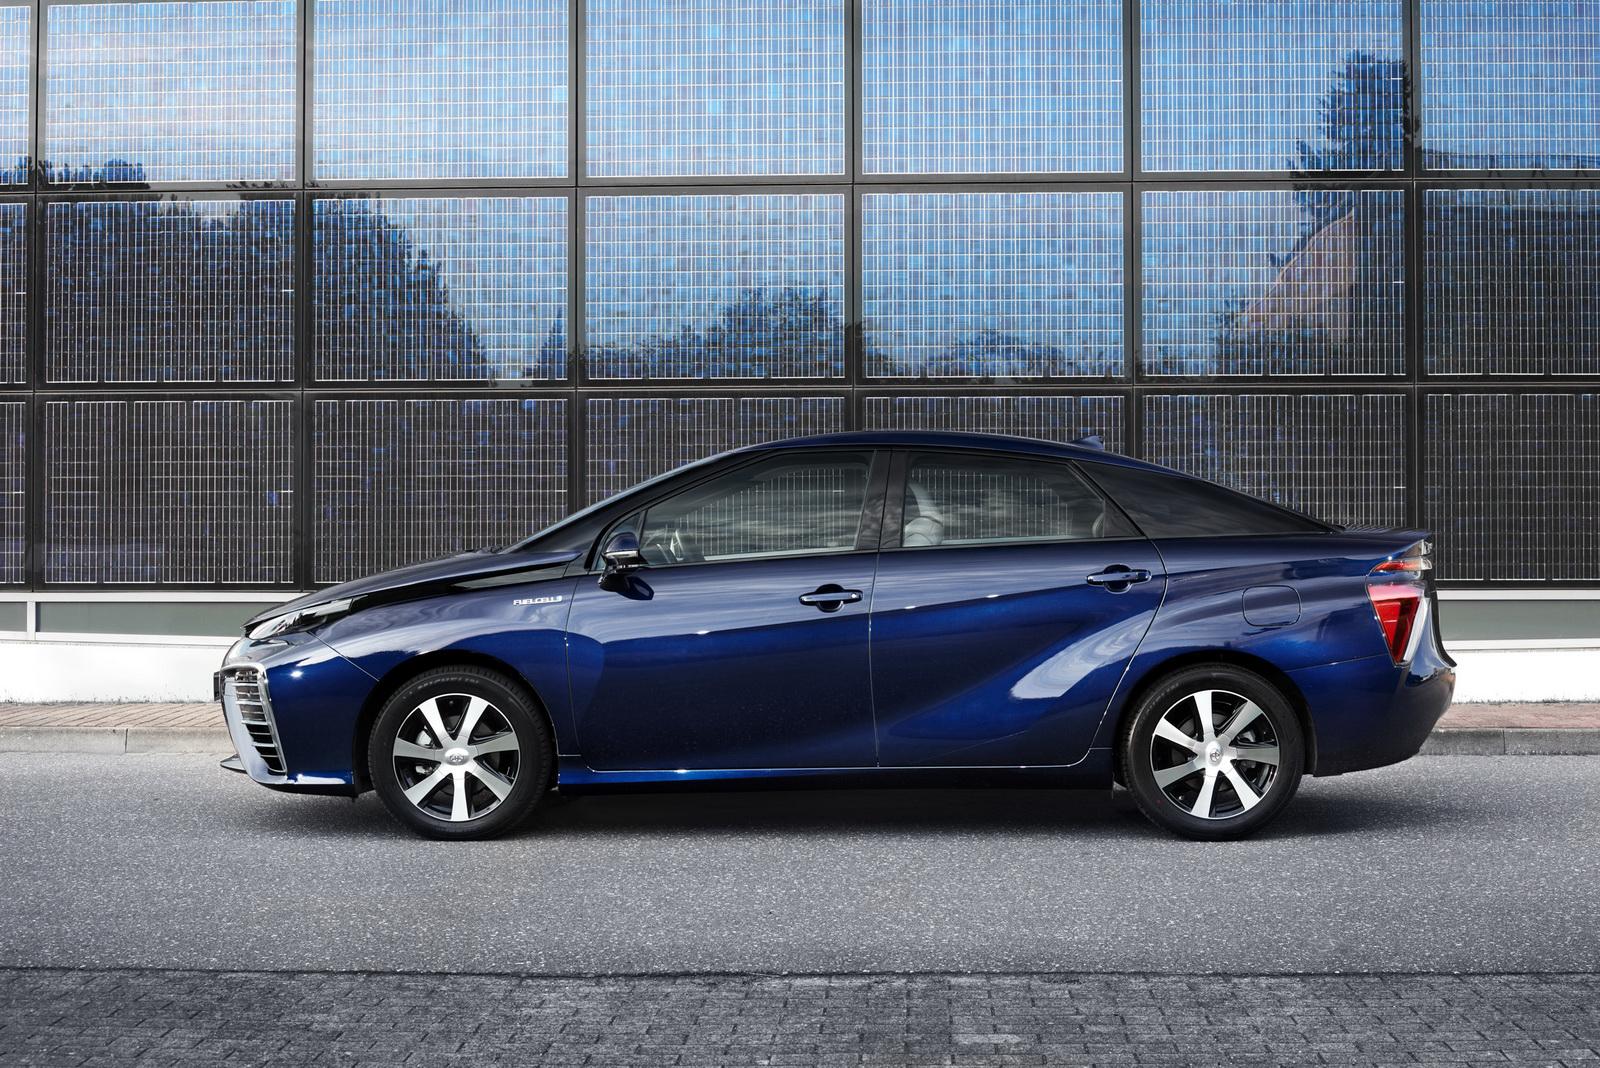 2016 Toyota Mirai Avrupa Versiyon Detayl Resim Galerisi